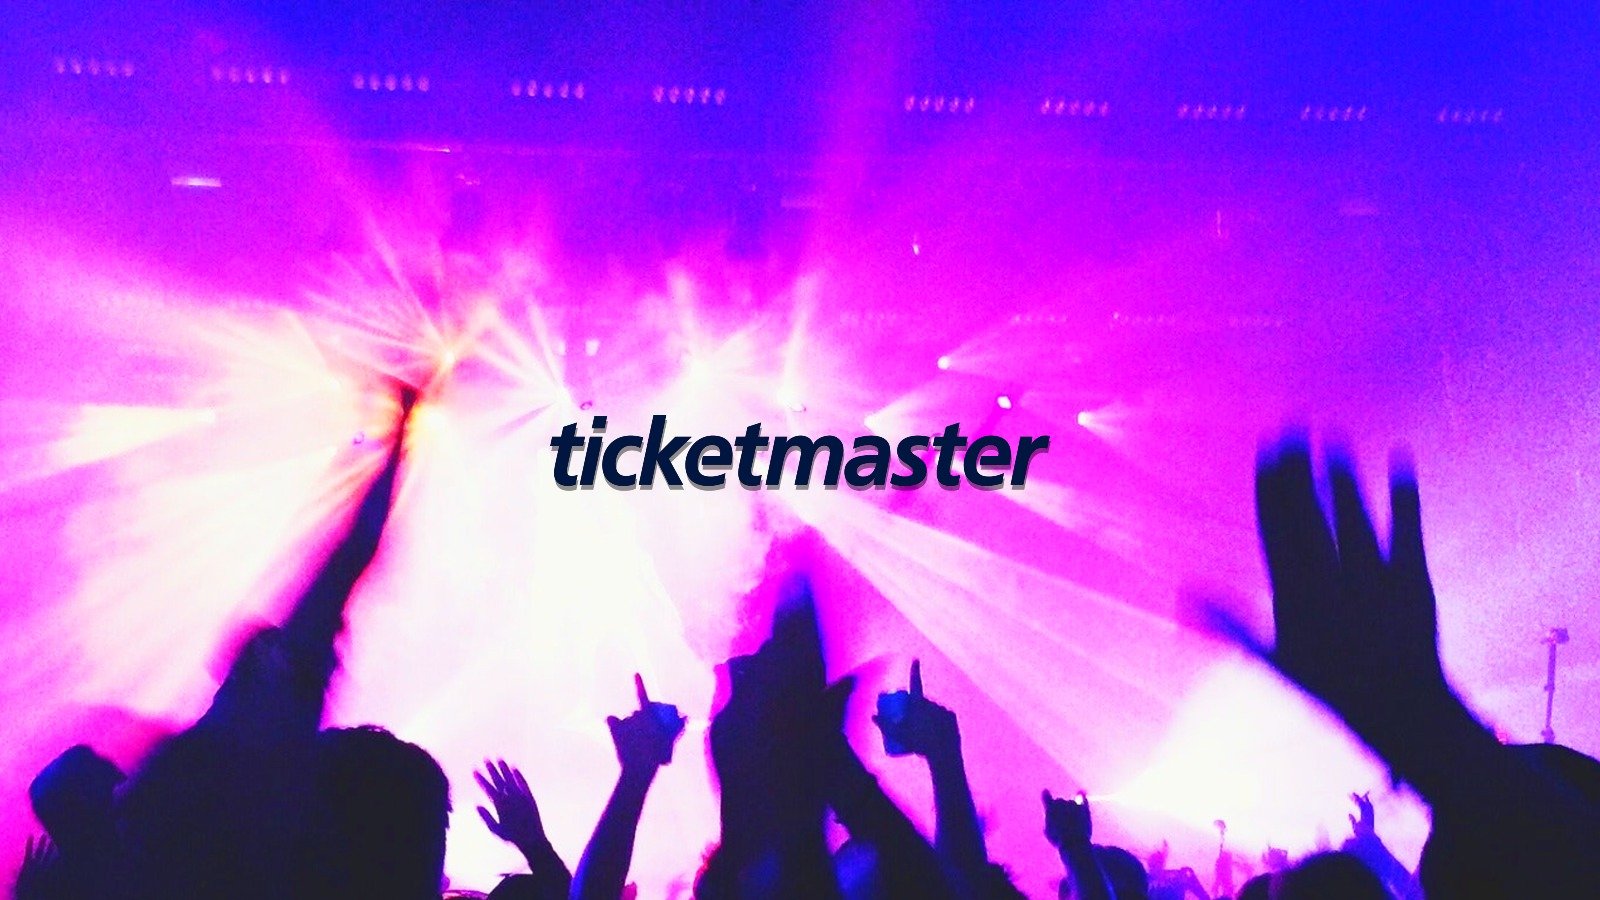 Live Nation finally confirms massive Ticketmaster data breach